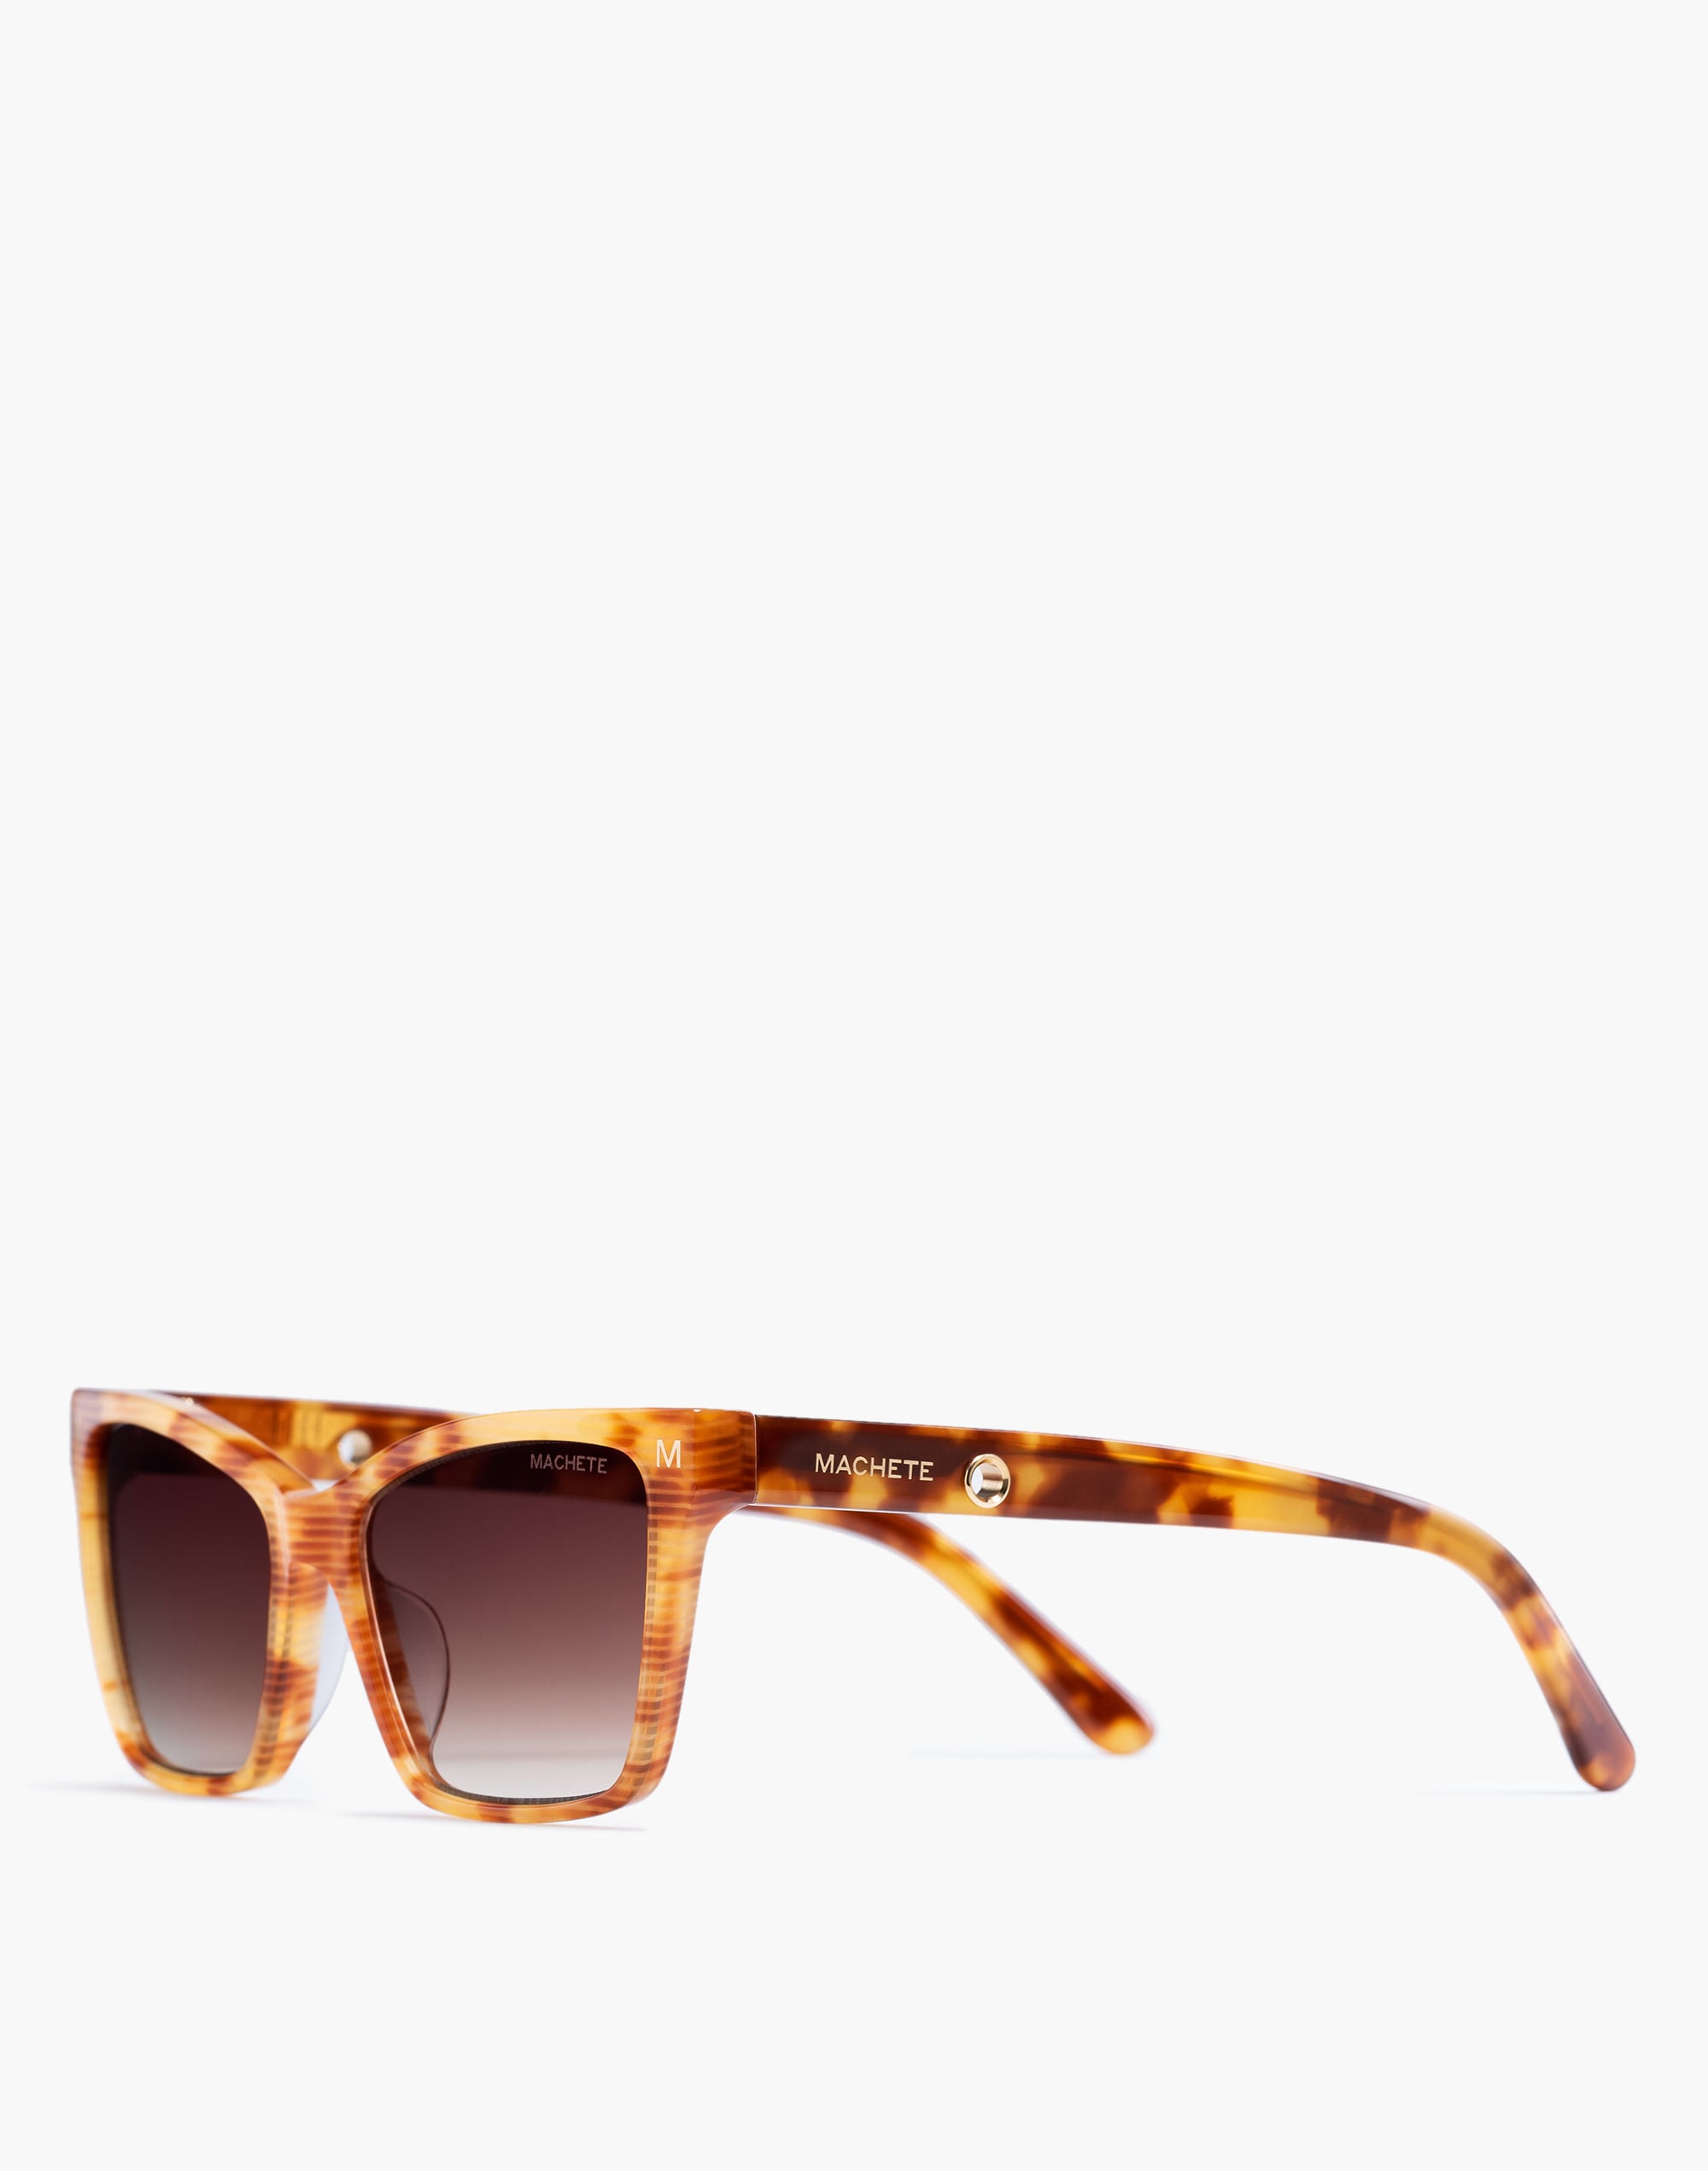 Mw Machete Sally Sunglasses In Light Tortoise